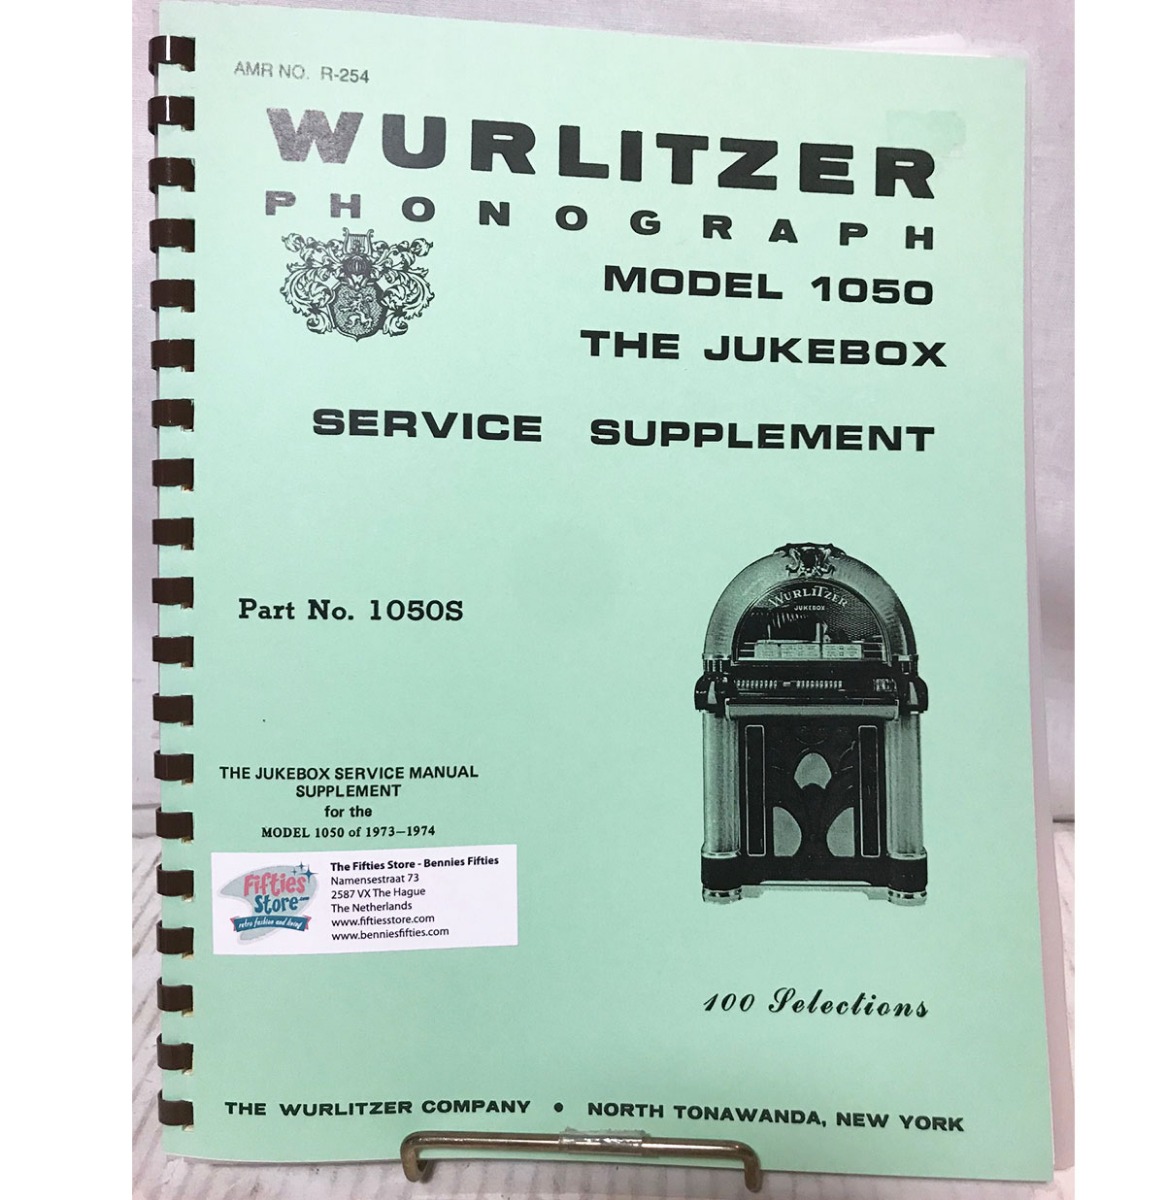 Service Manual - Wurlitzer Jukebox Model 1050 - Supplement